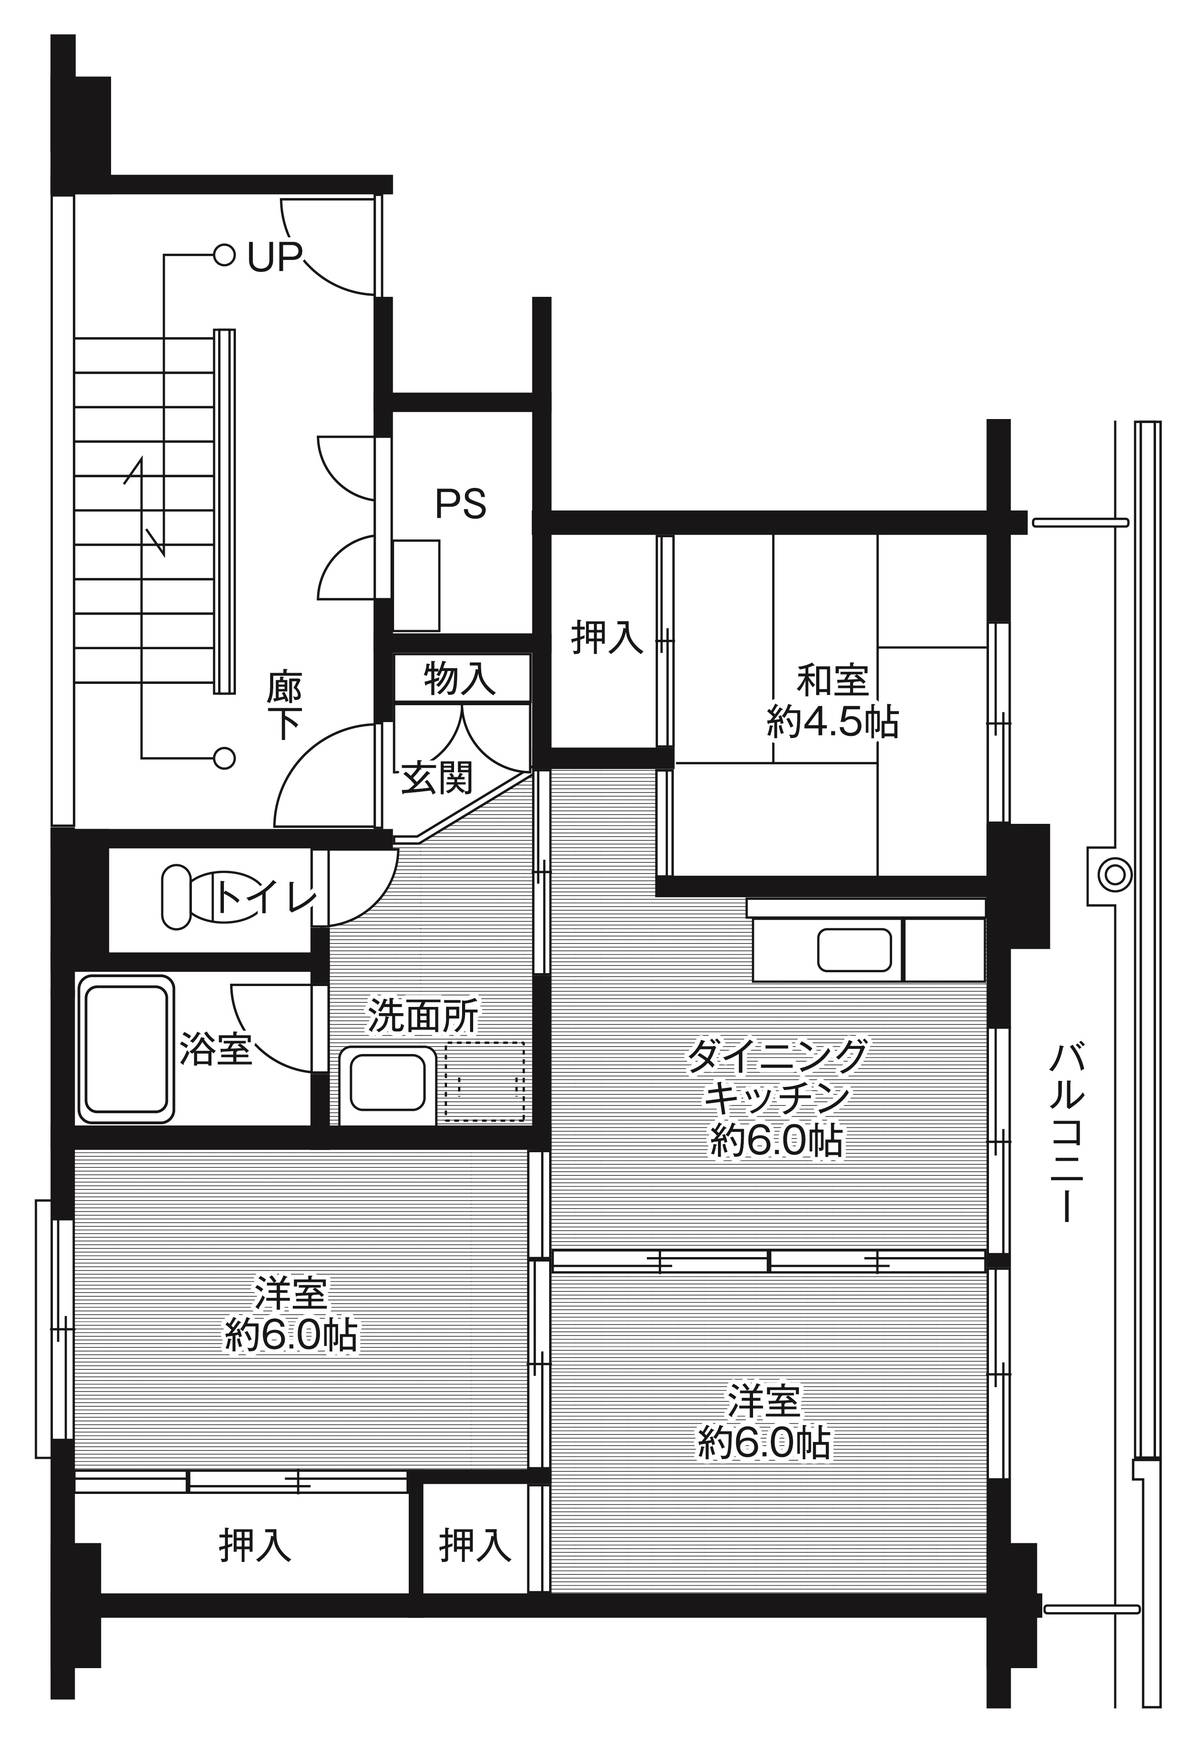 3DK floorplan of Village House Hitoichi in Hachinohe-shi